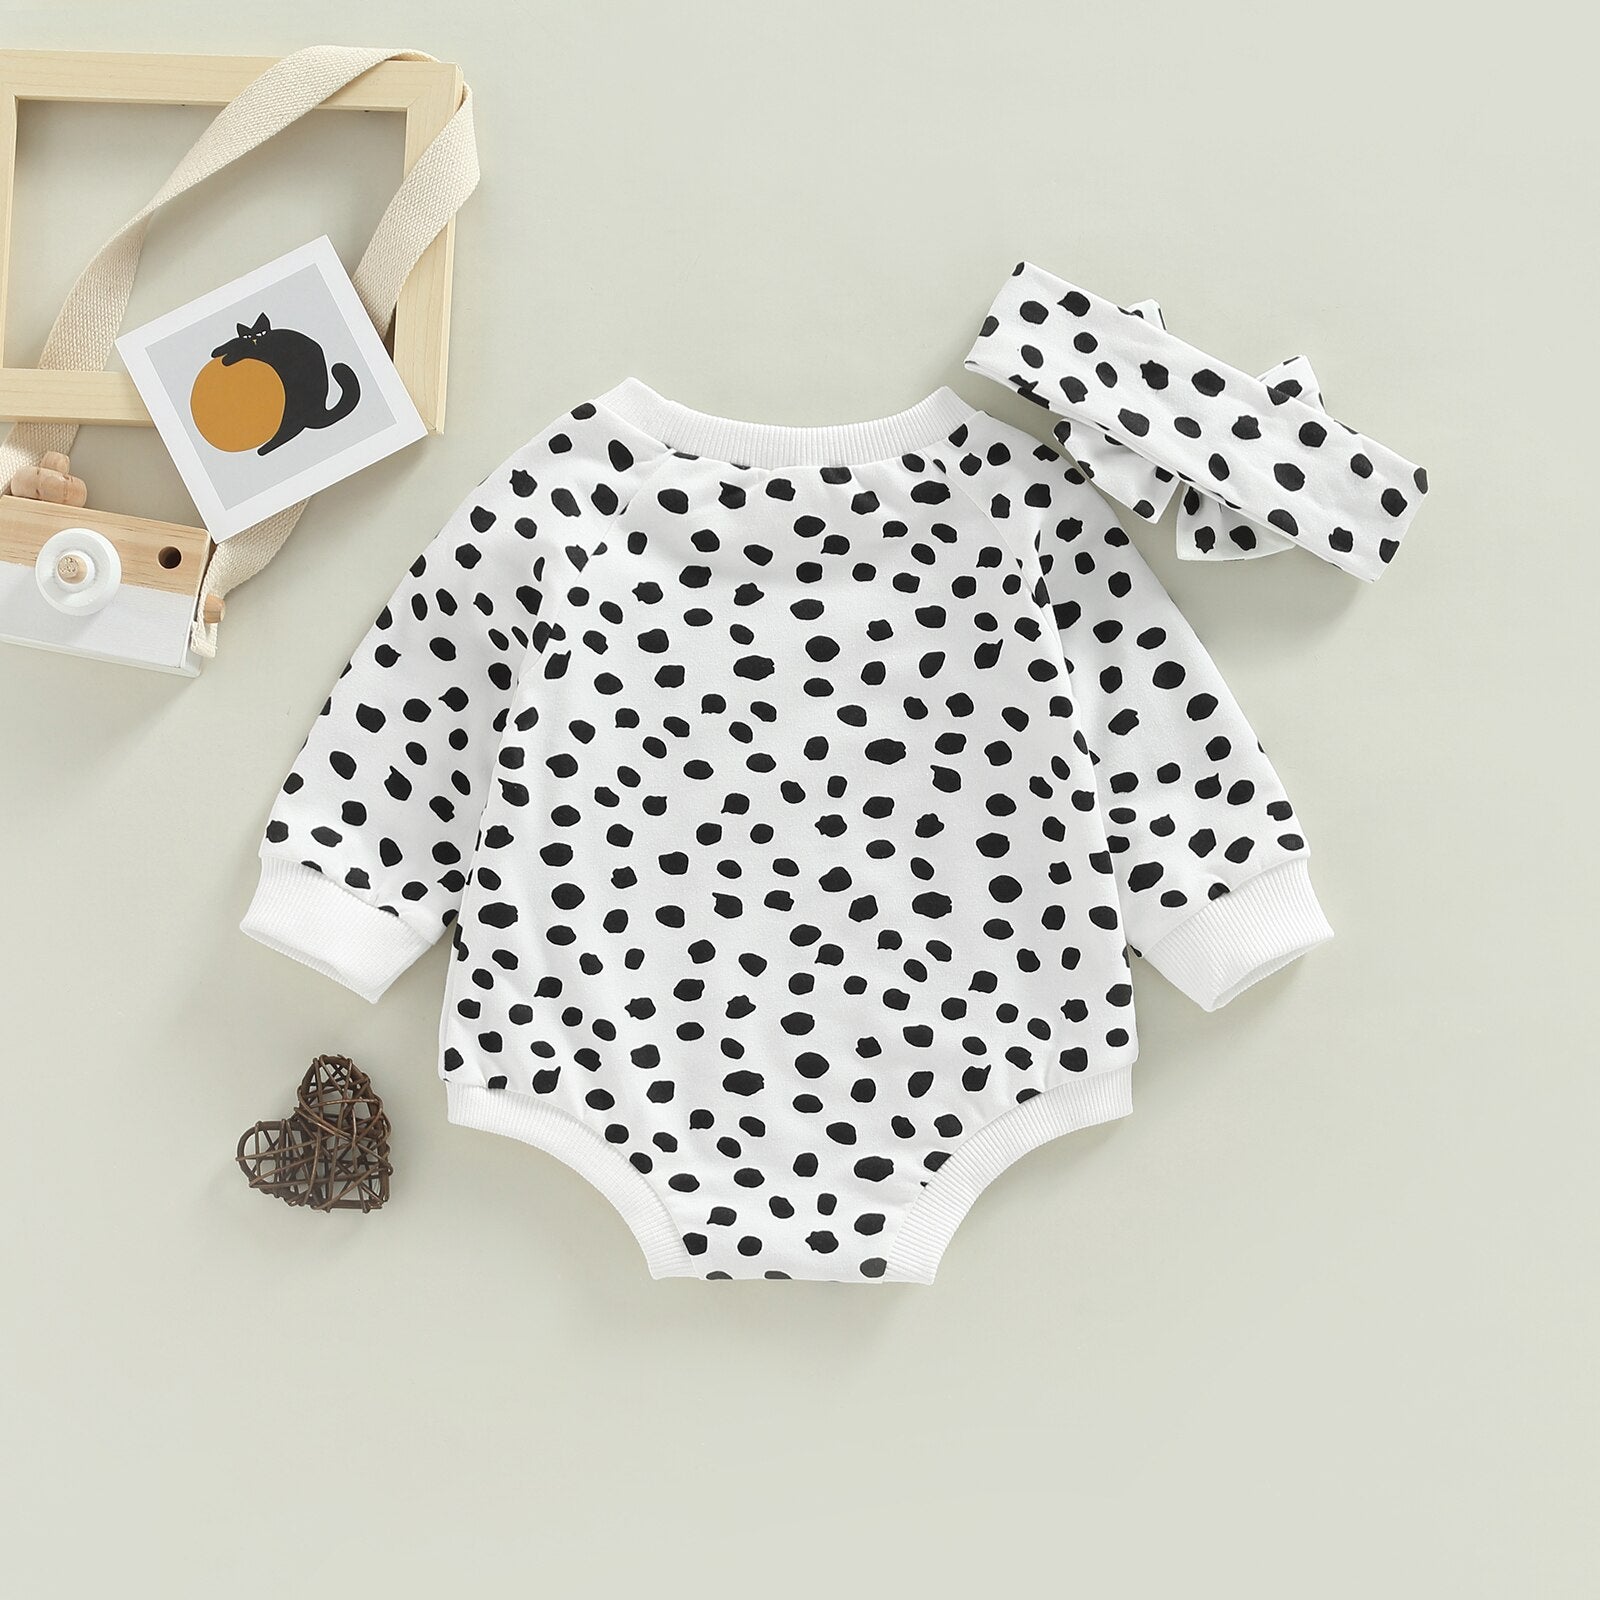 Black and White Dot Print Baby Bodysuit With Headband